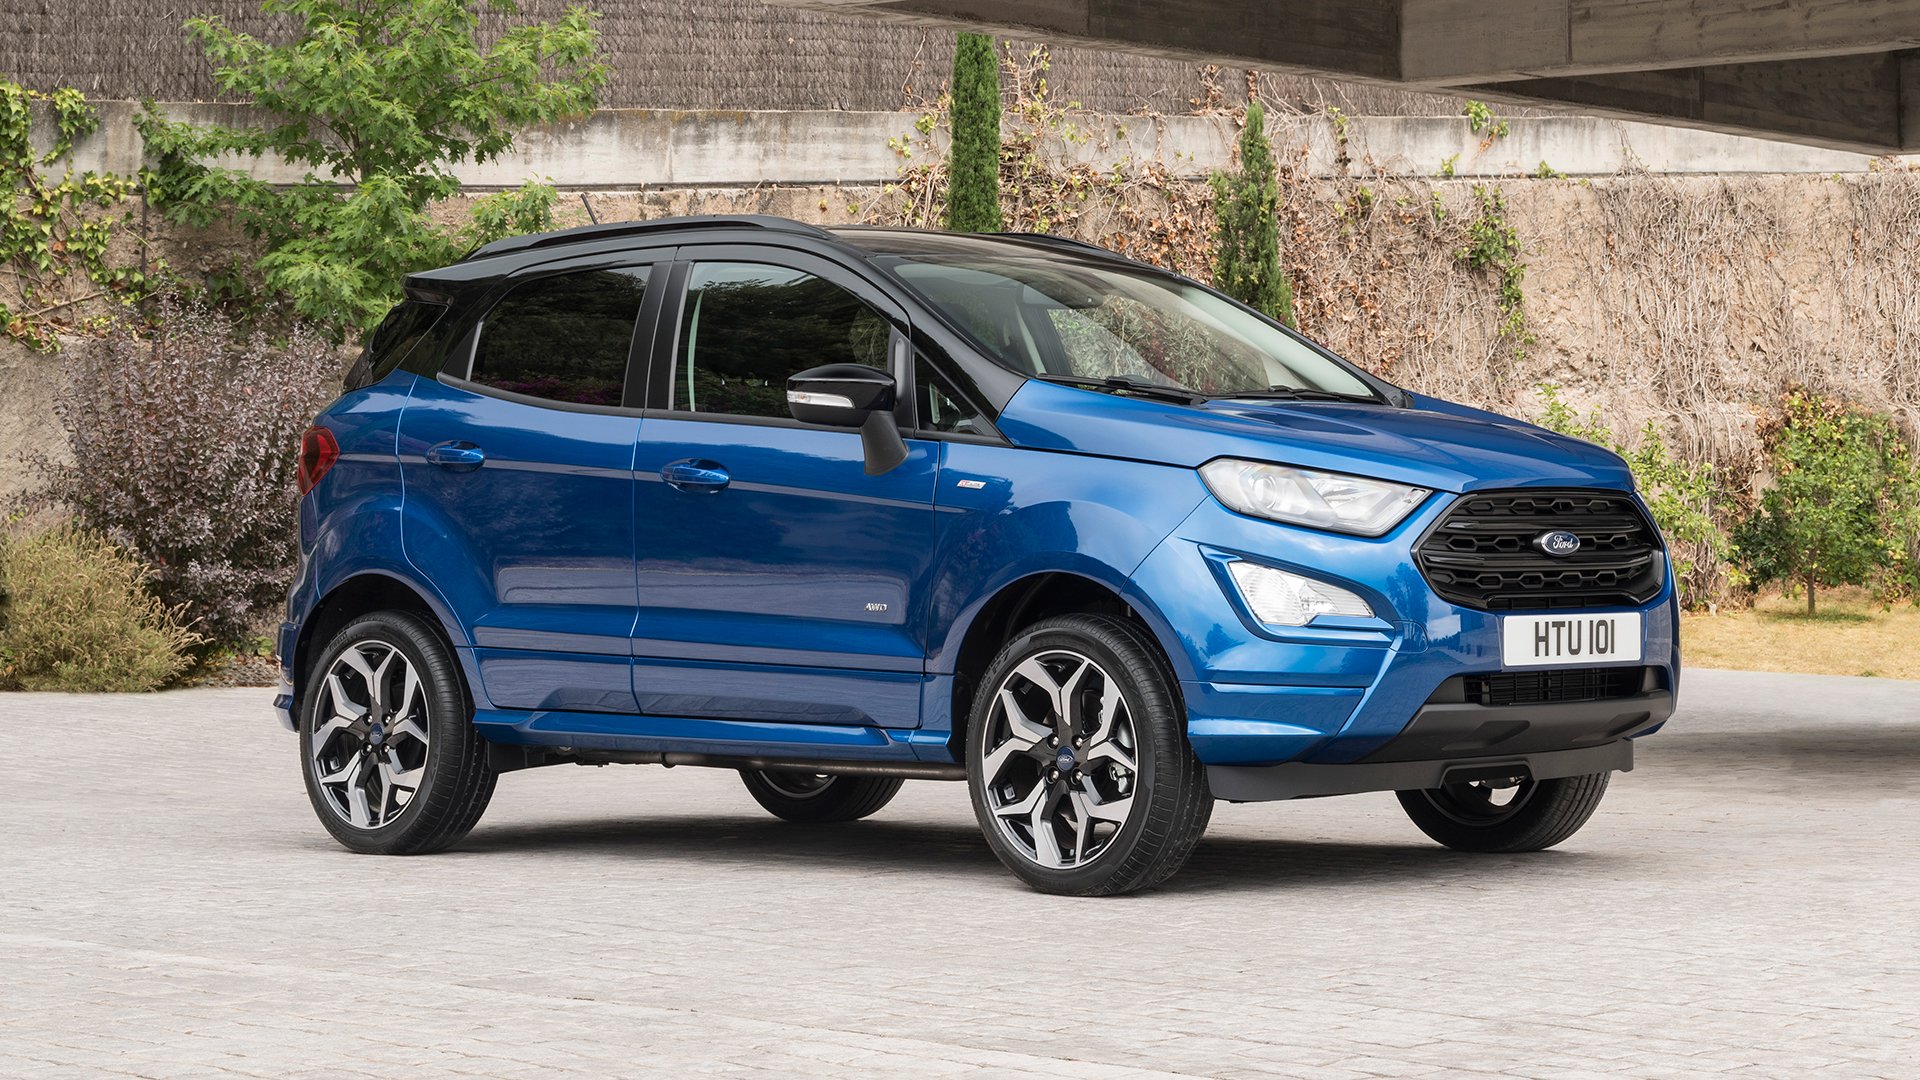 New Ford Ecosport SUV revealed